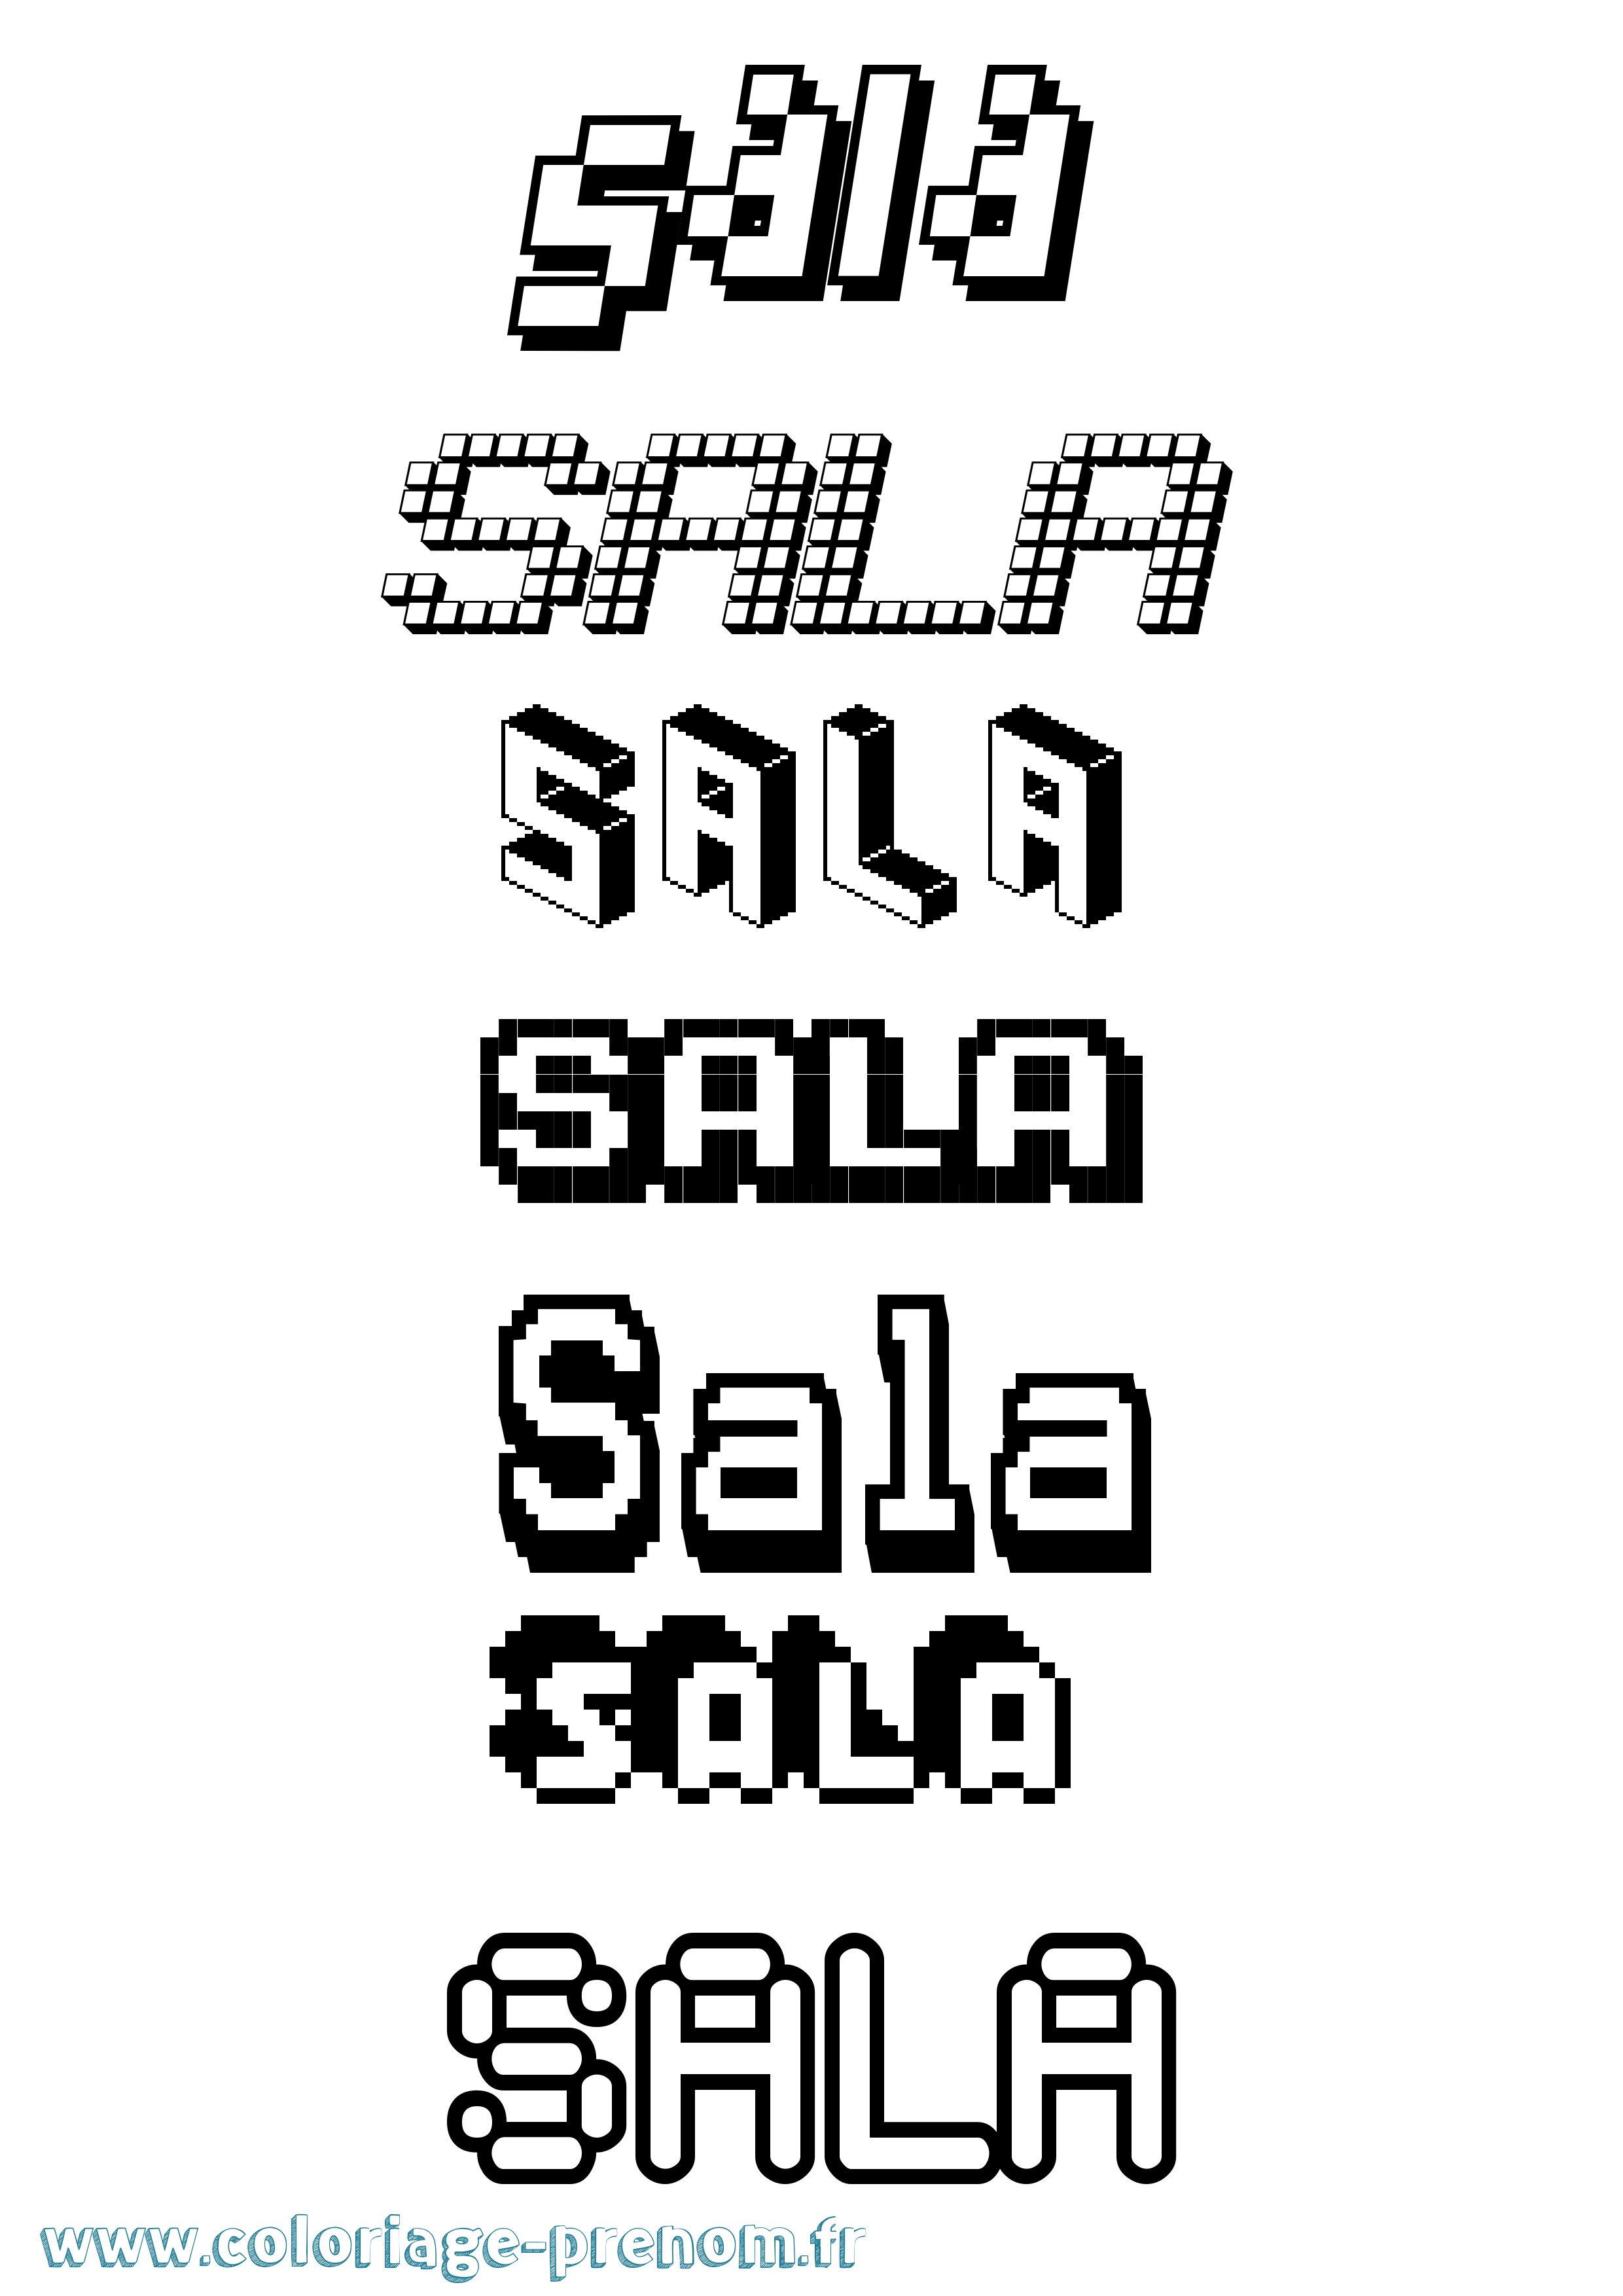 Coloriage prénom Sala Pixel